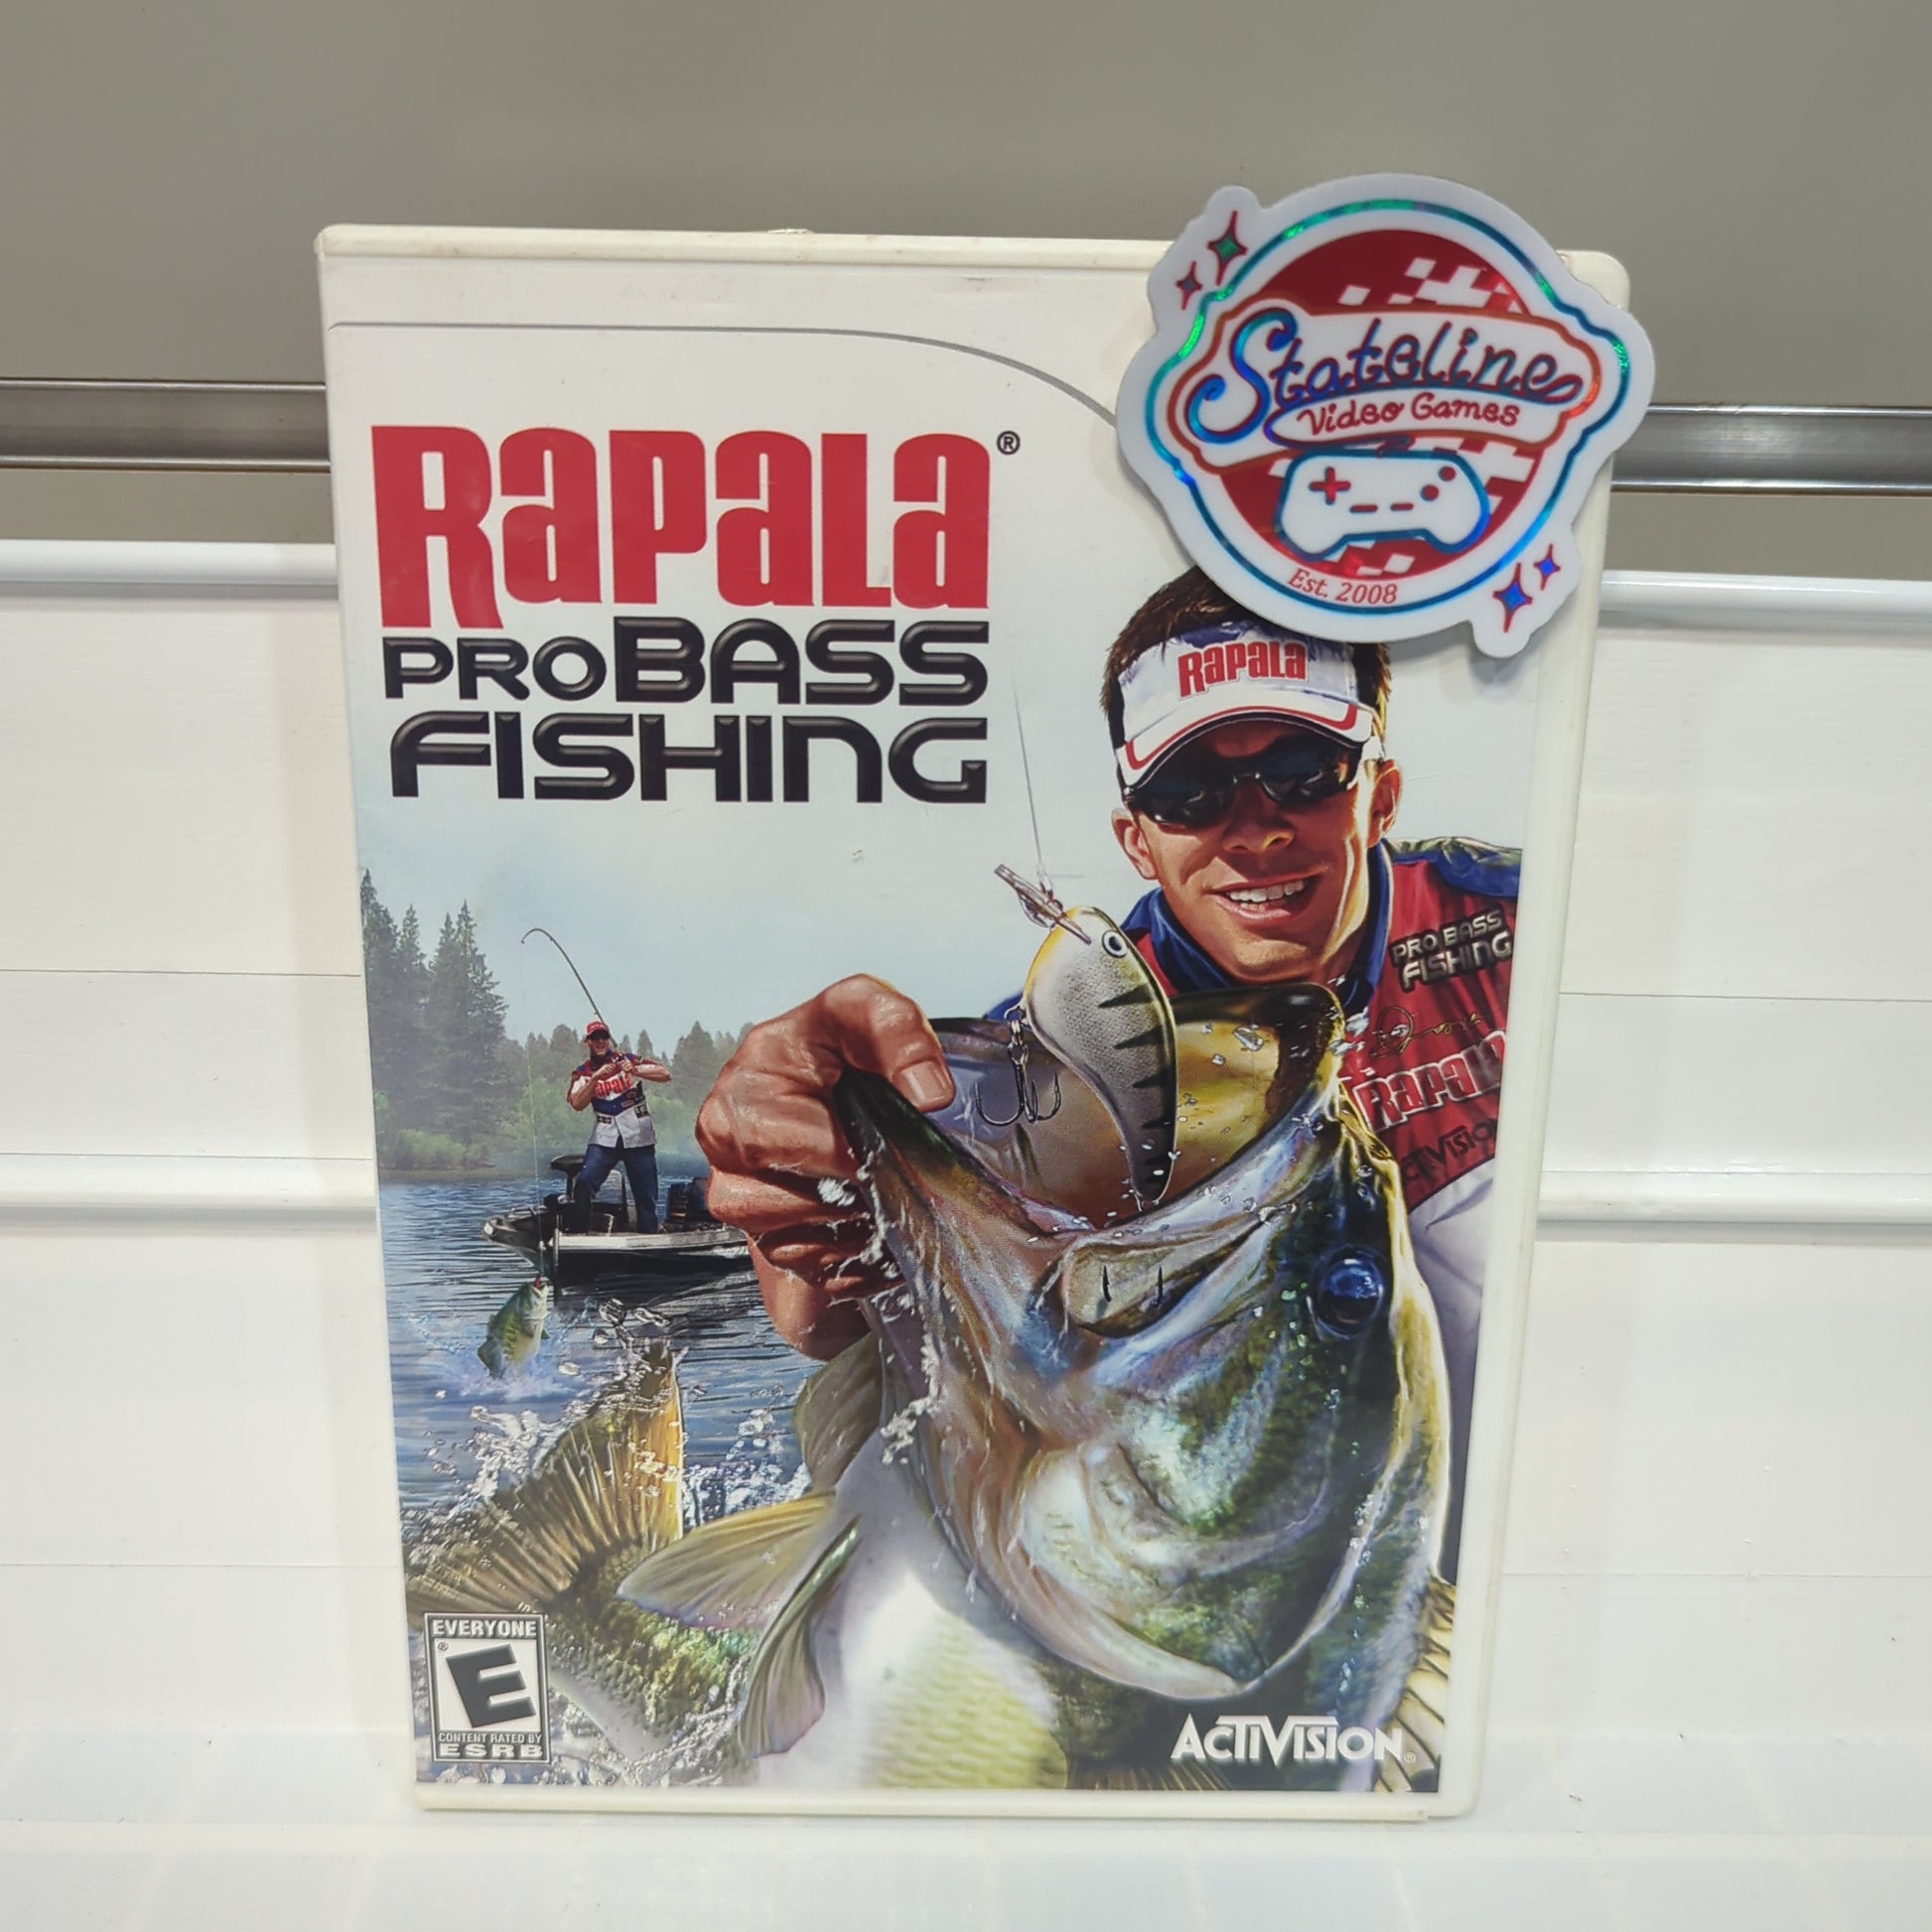 Rapala Pro Bass Fishing 2010 - Wii – Stateline Video Games Inc.